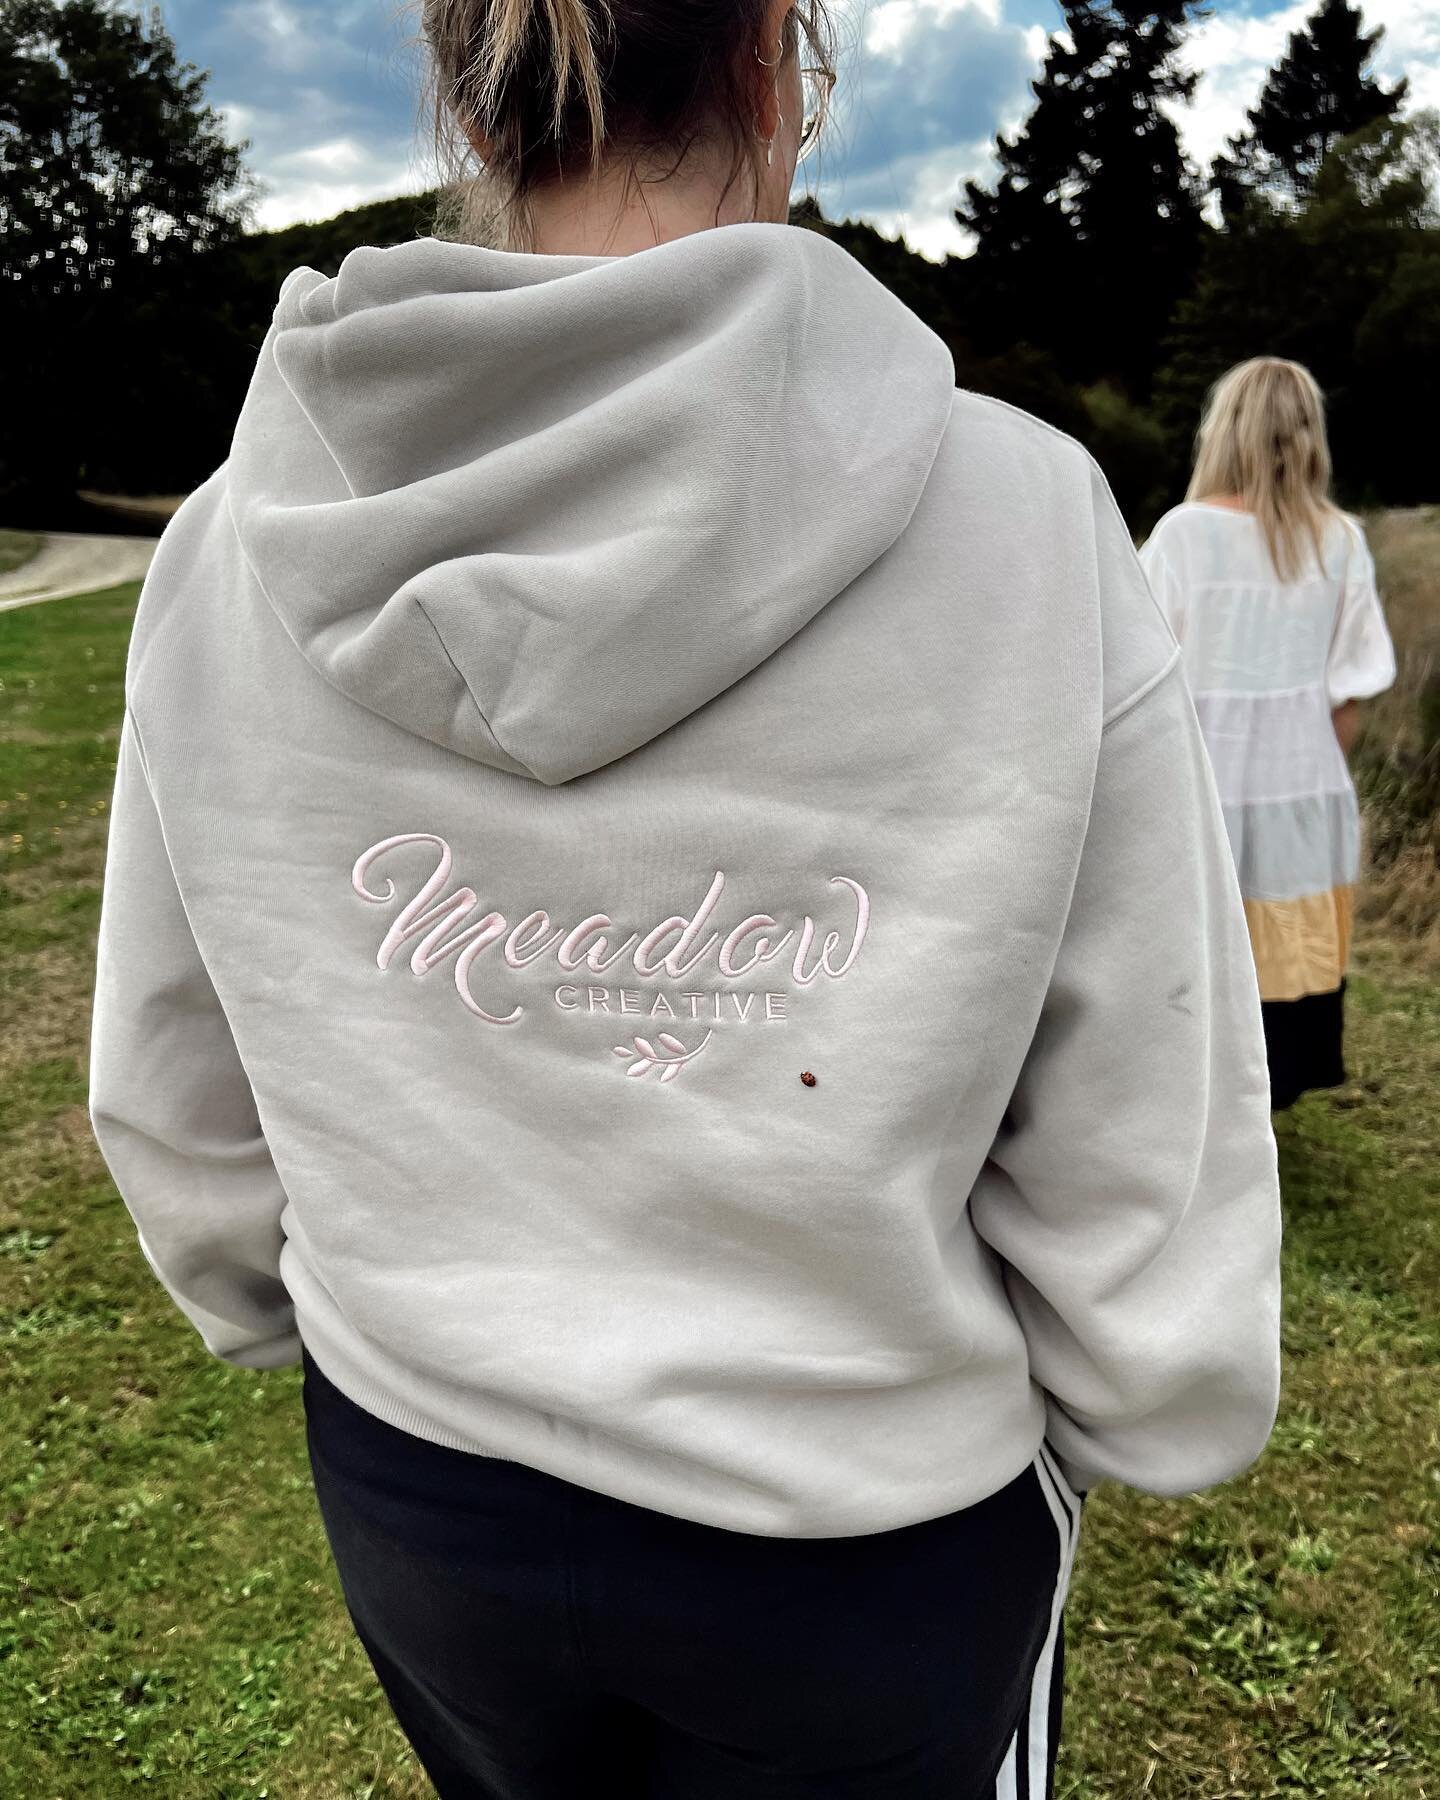 &mdash;&mdash; lil cutie 🐞 

Loving our new hoodies just as much as us x